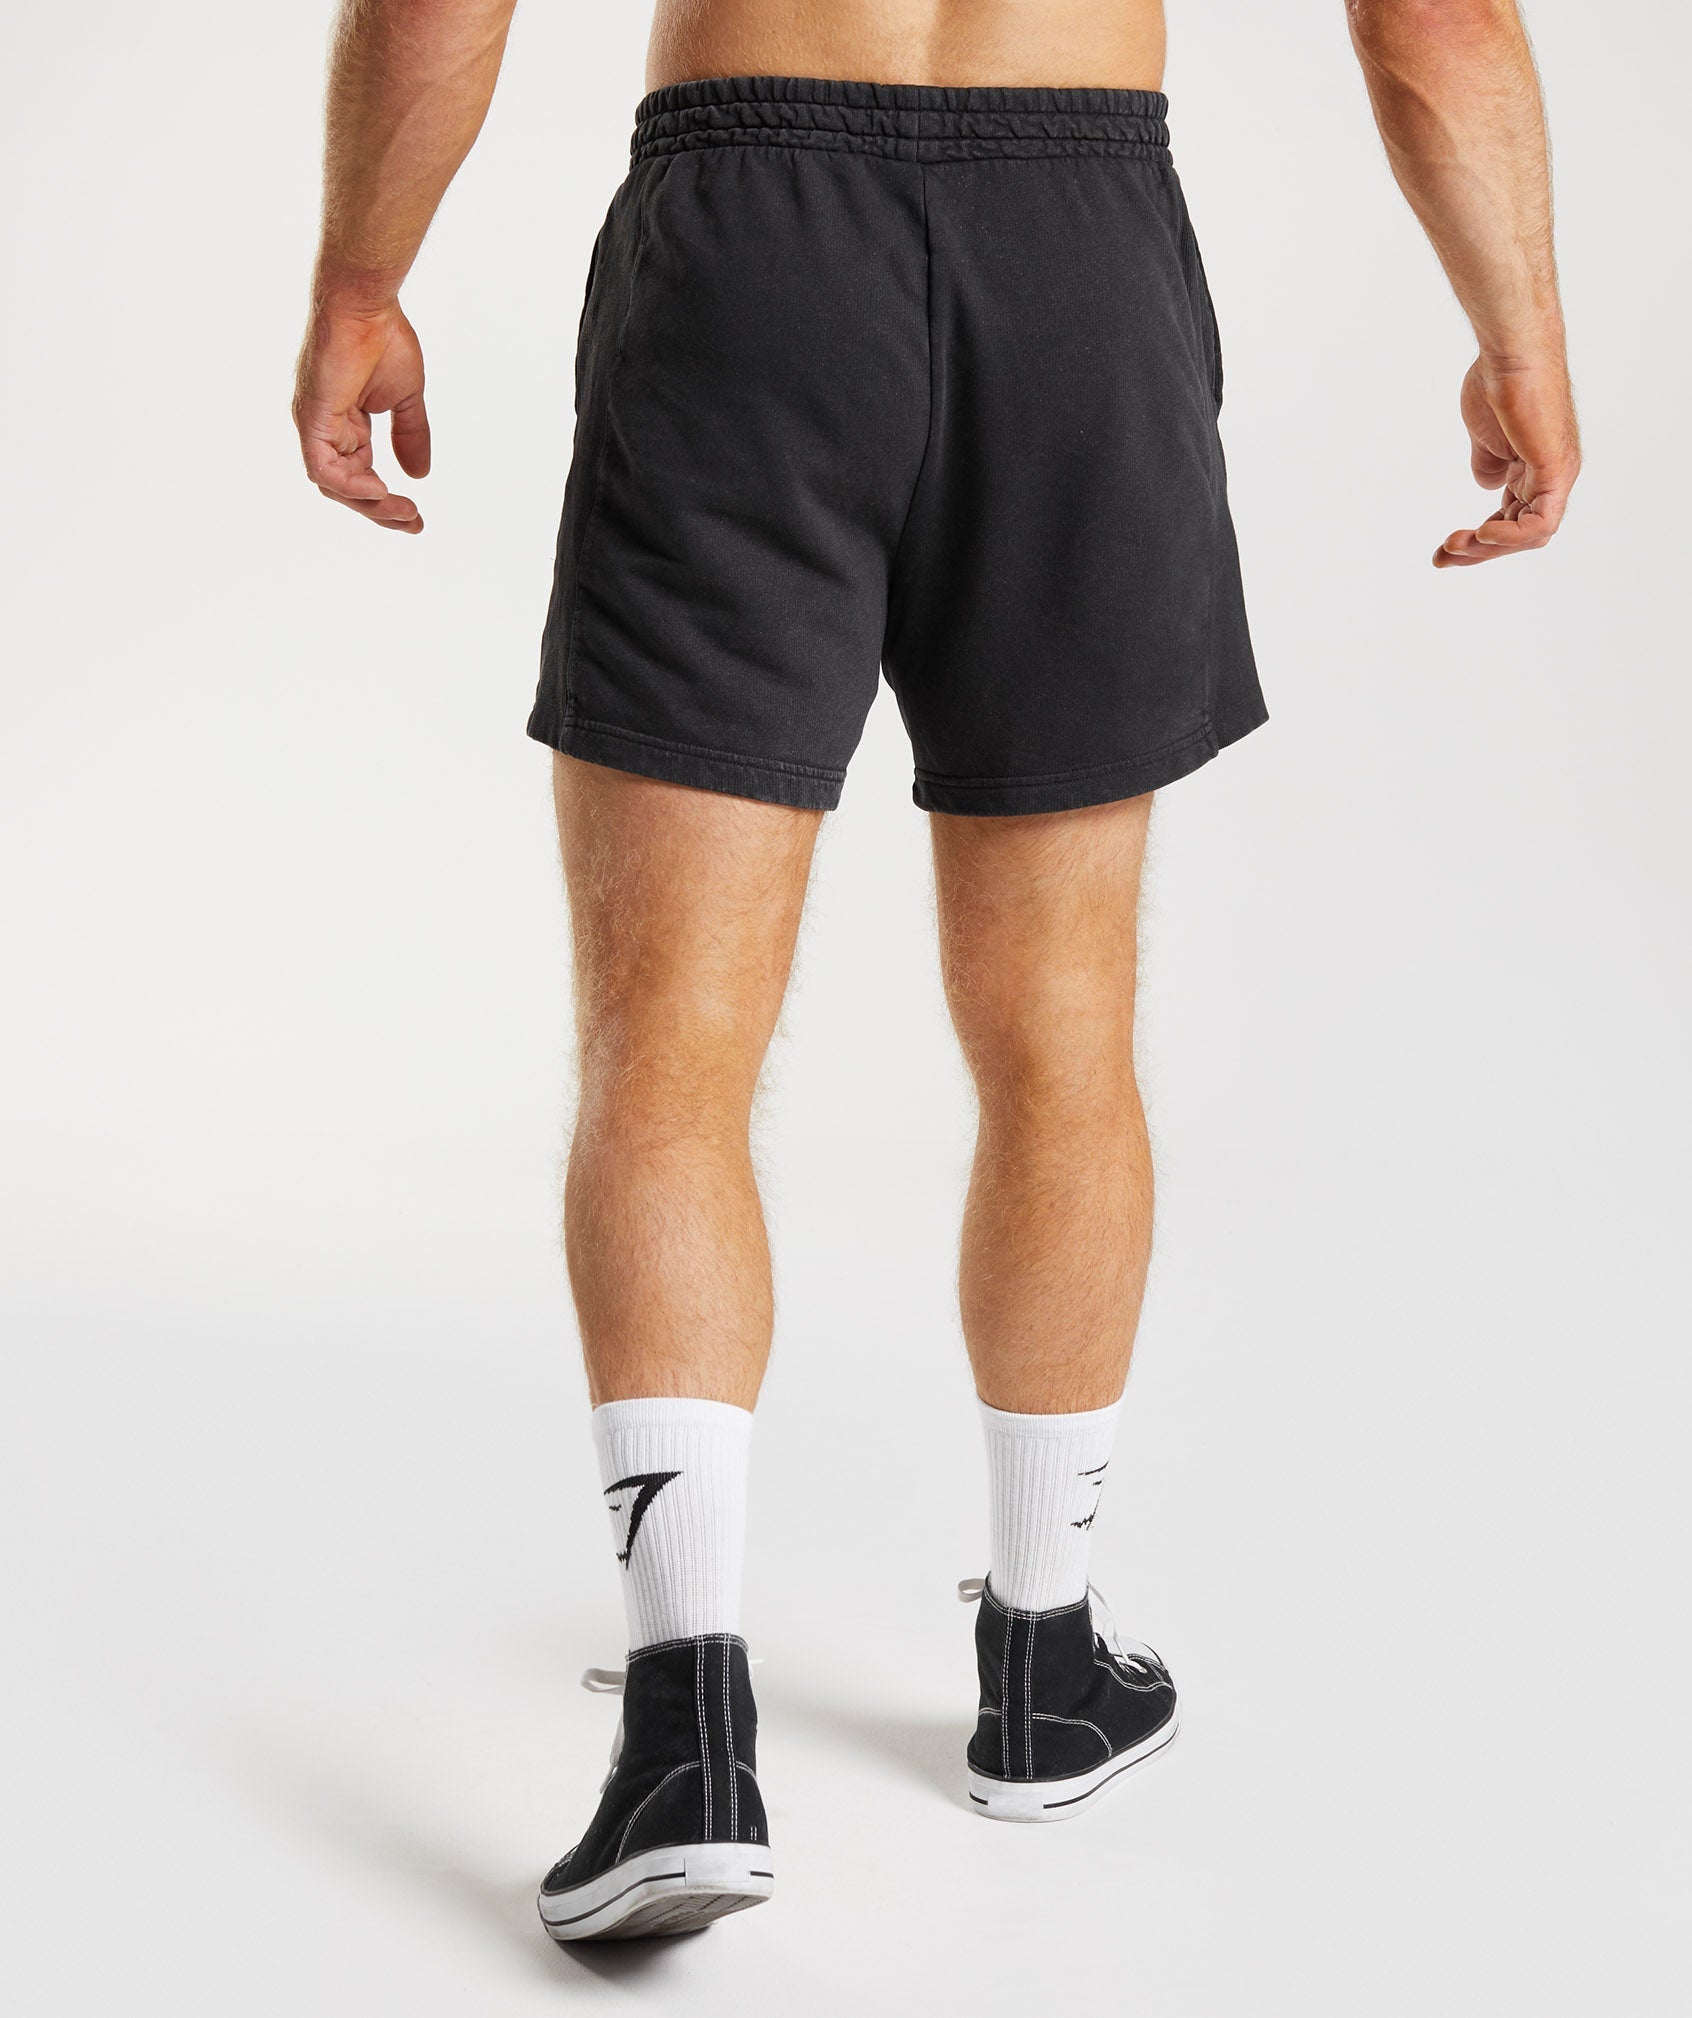 Gymshark 315 Woven Shorts - Black